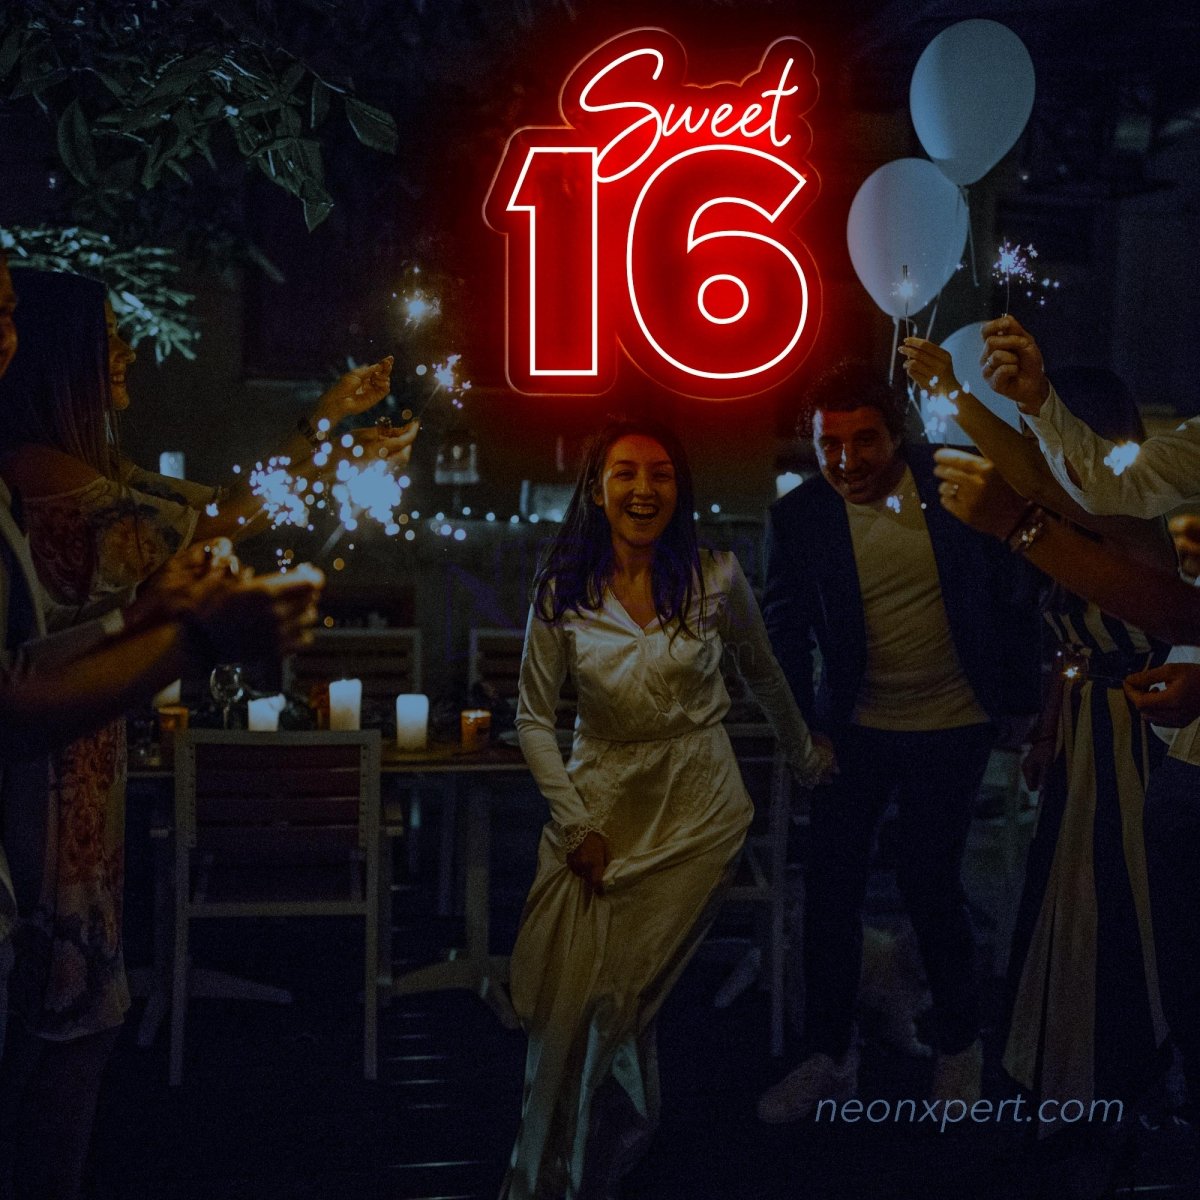 Sweet 16 Large Neon Sign - Elegant Backdrop for Birthday Celebrations - NeonXpert